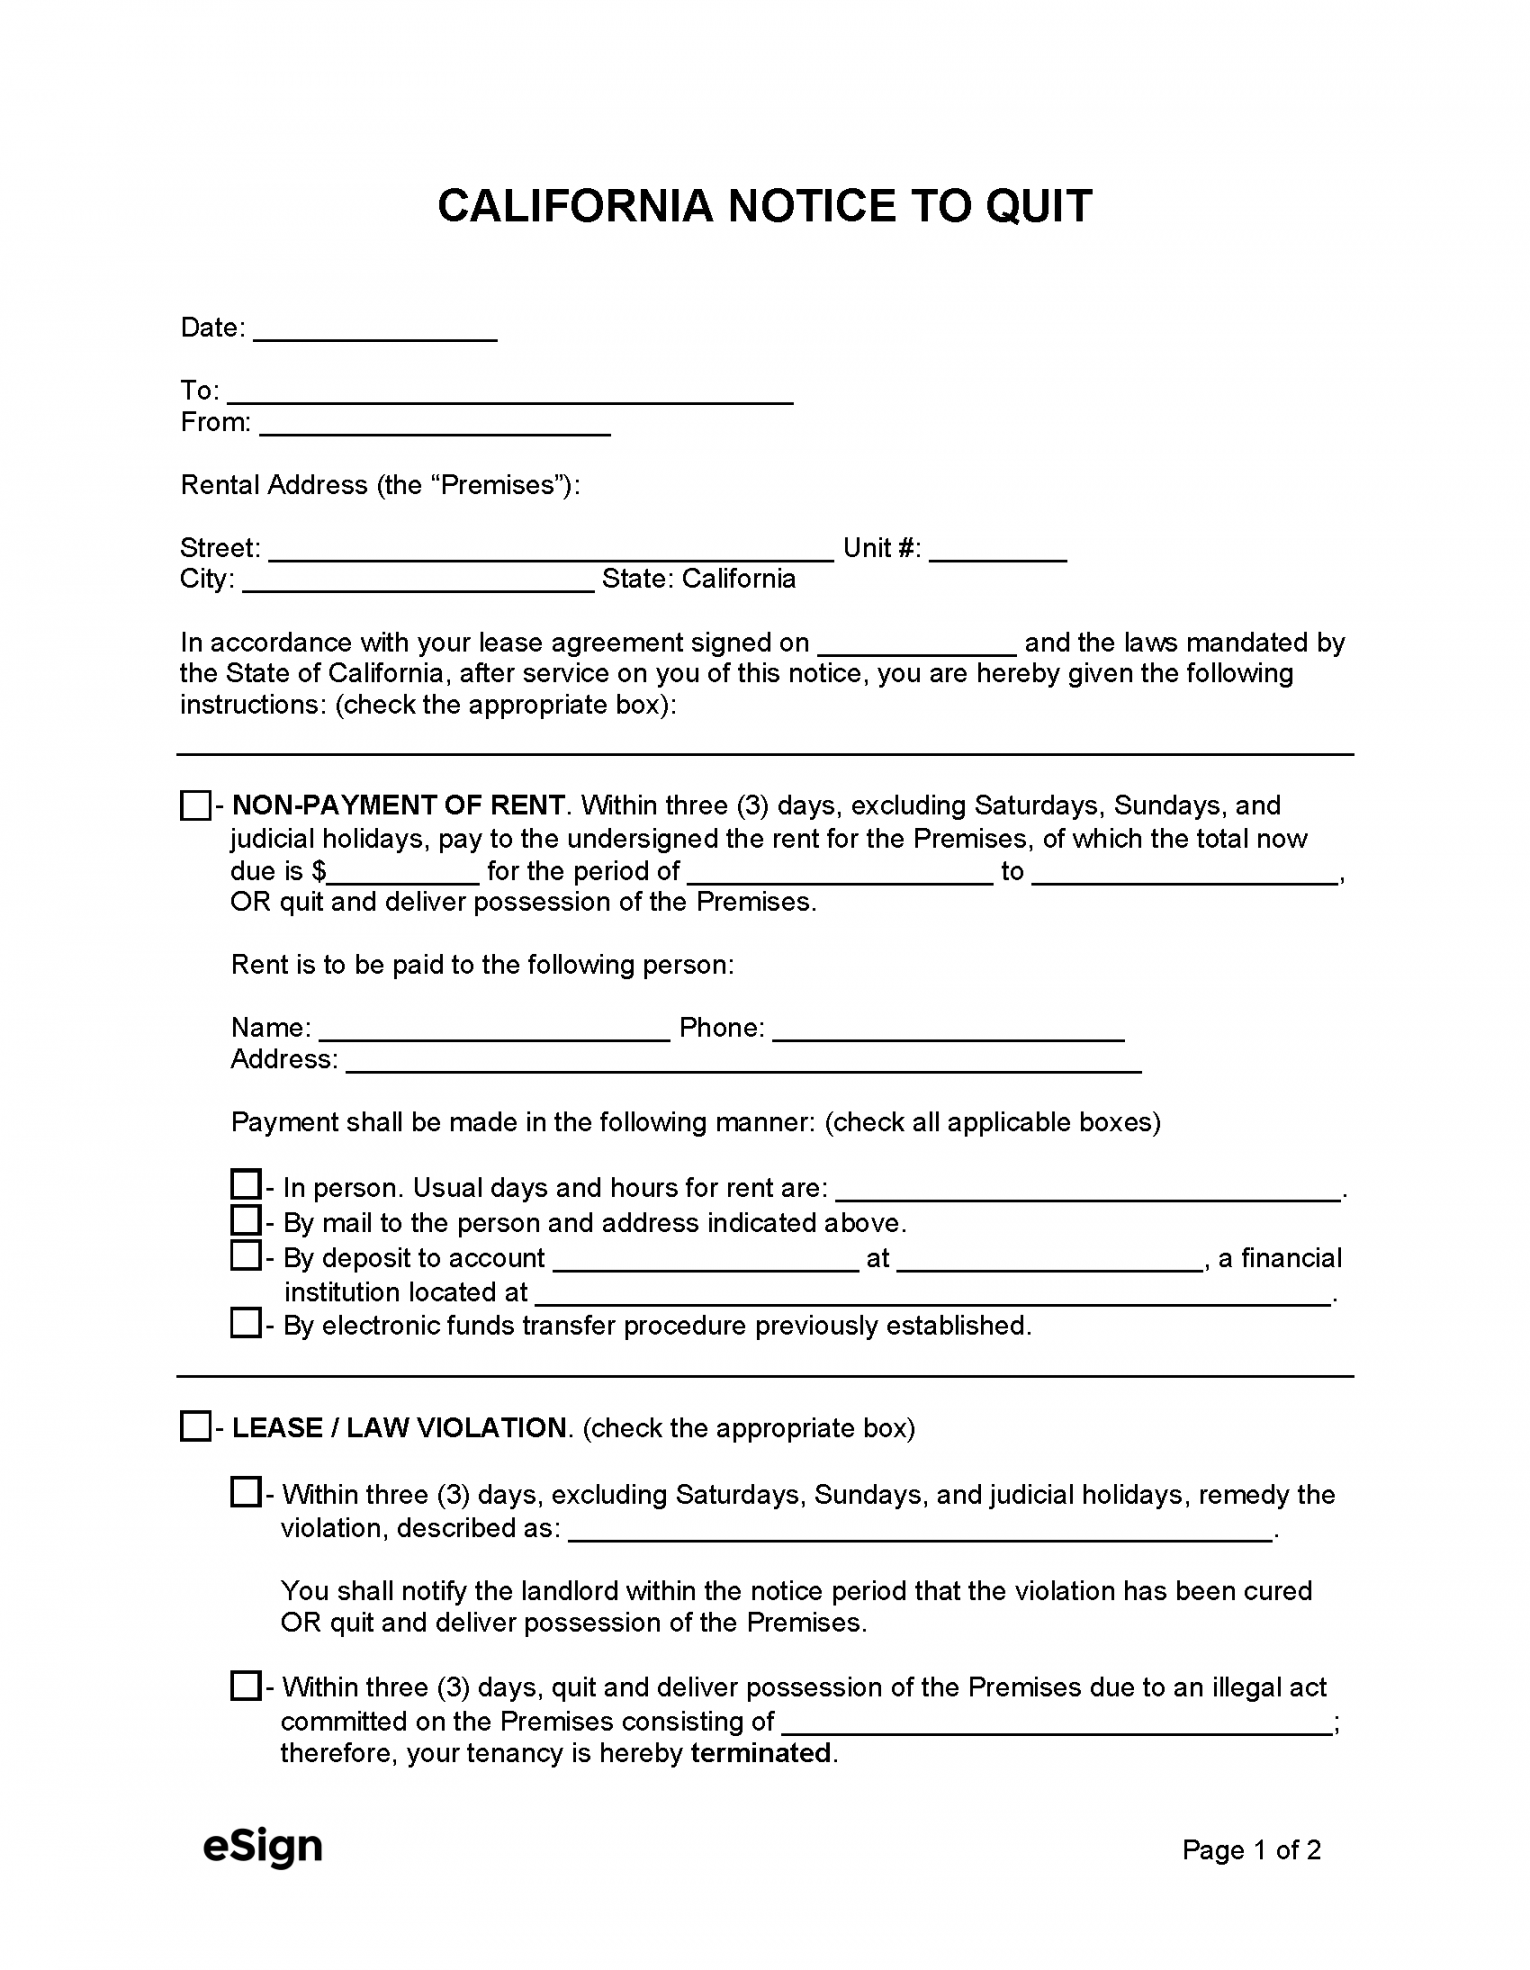 Free California Eviction Notice Templates ()  PDF  Word - FREE Printables - Free Printable 30 Day Notice To Vacate California